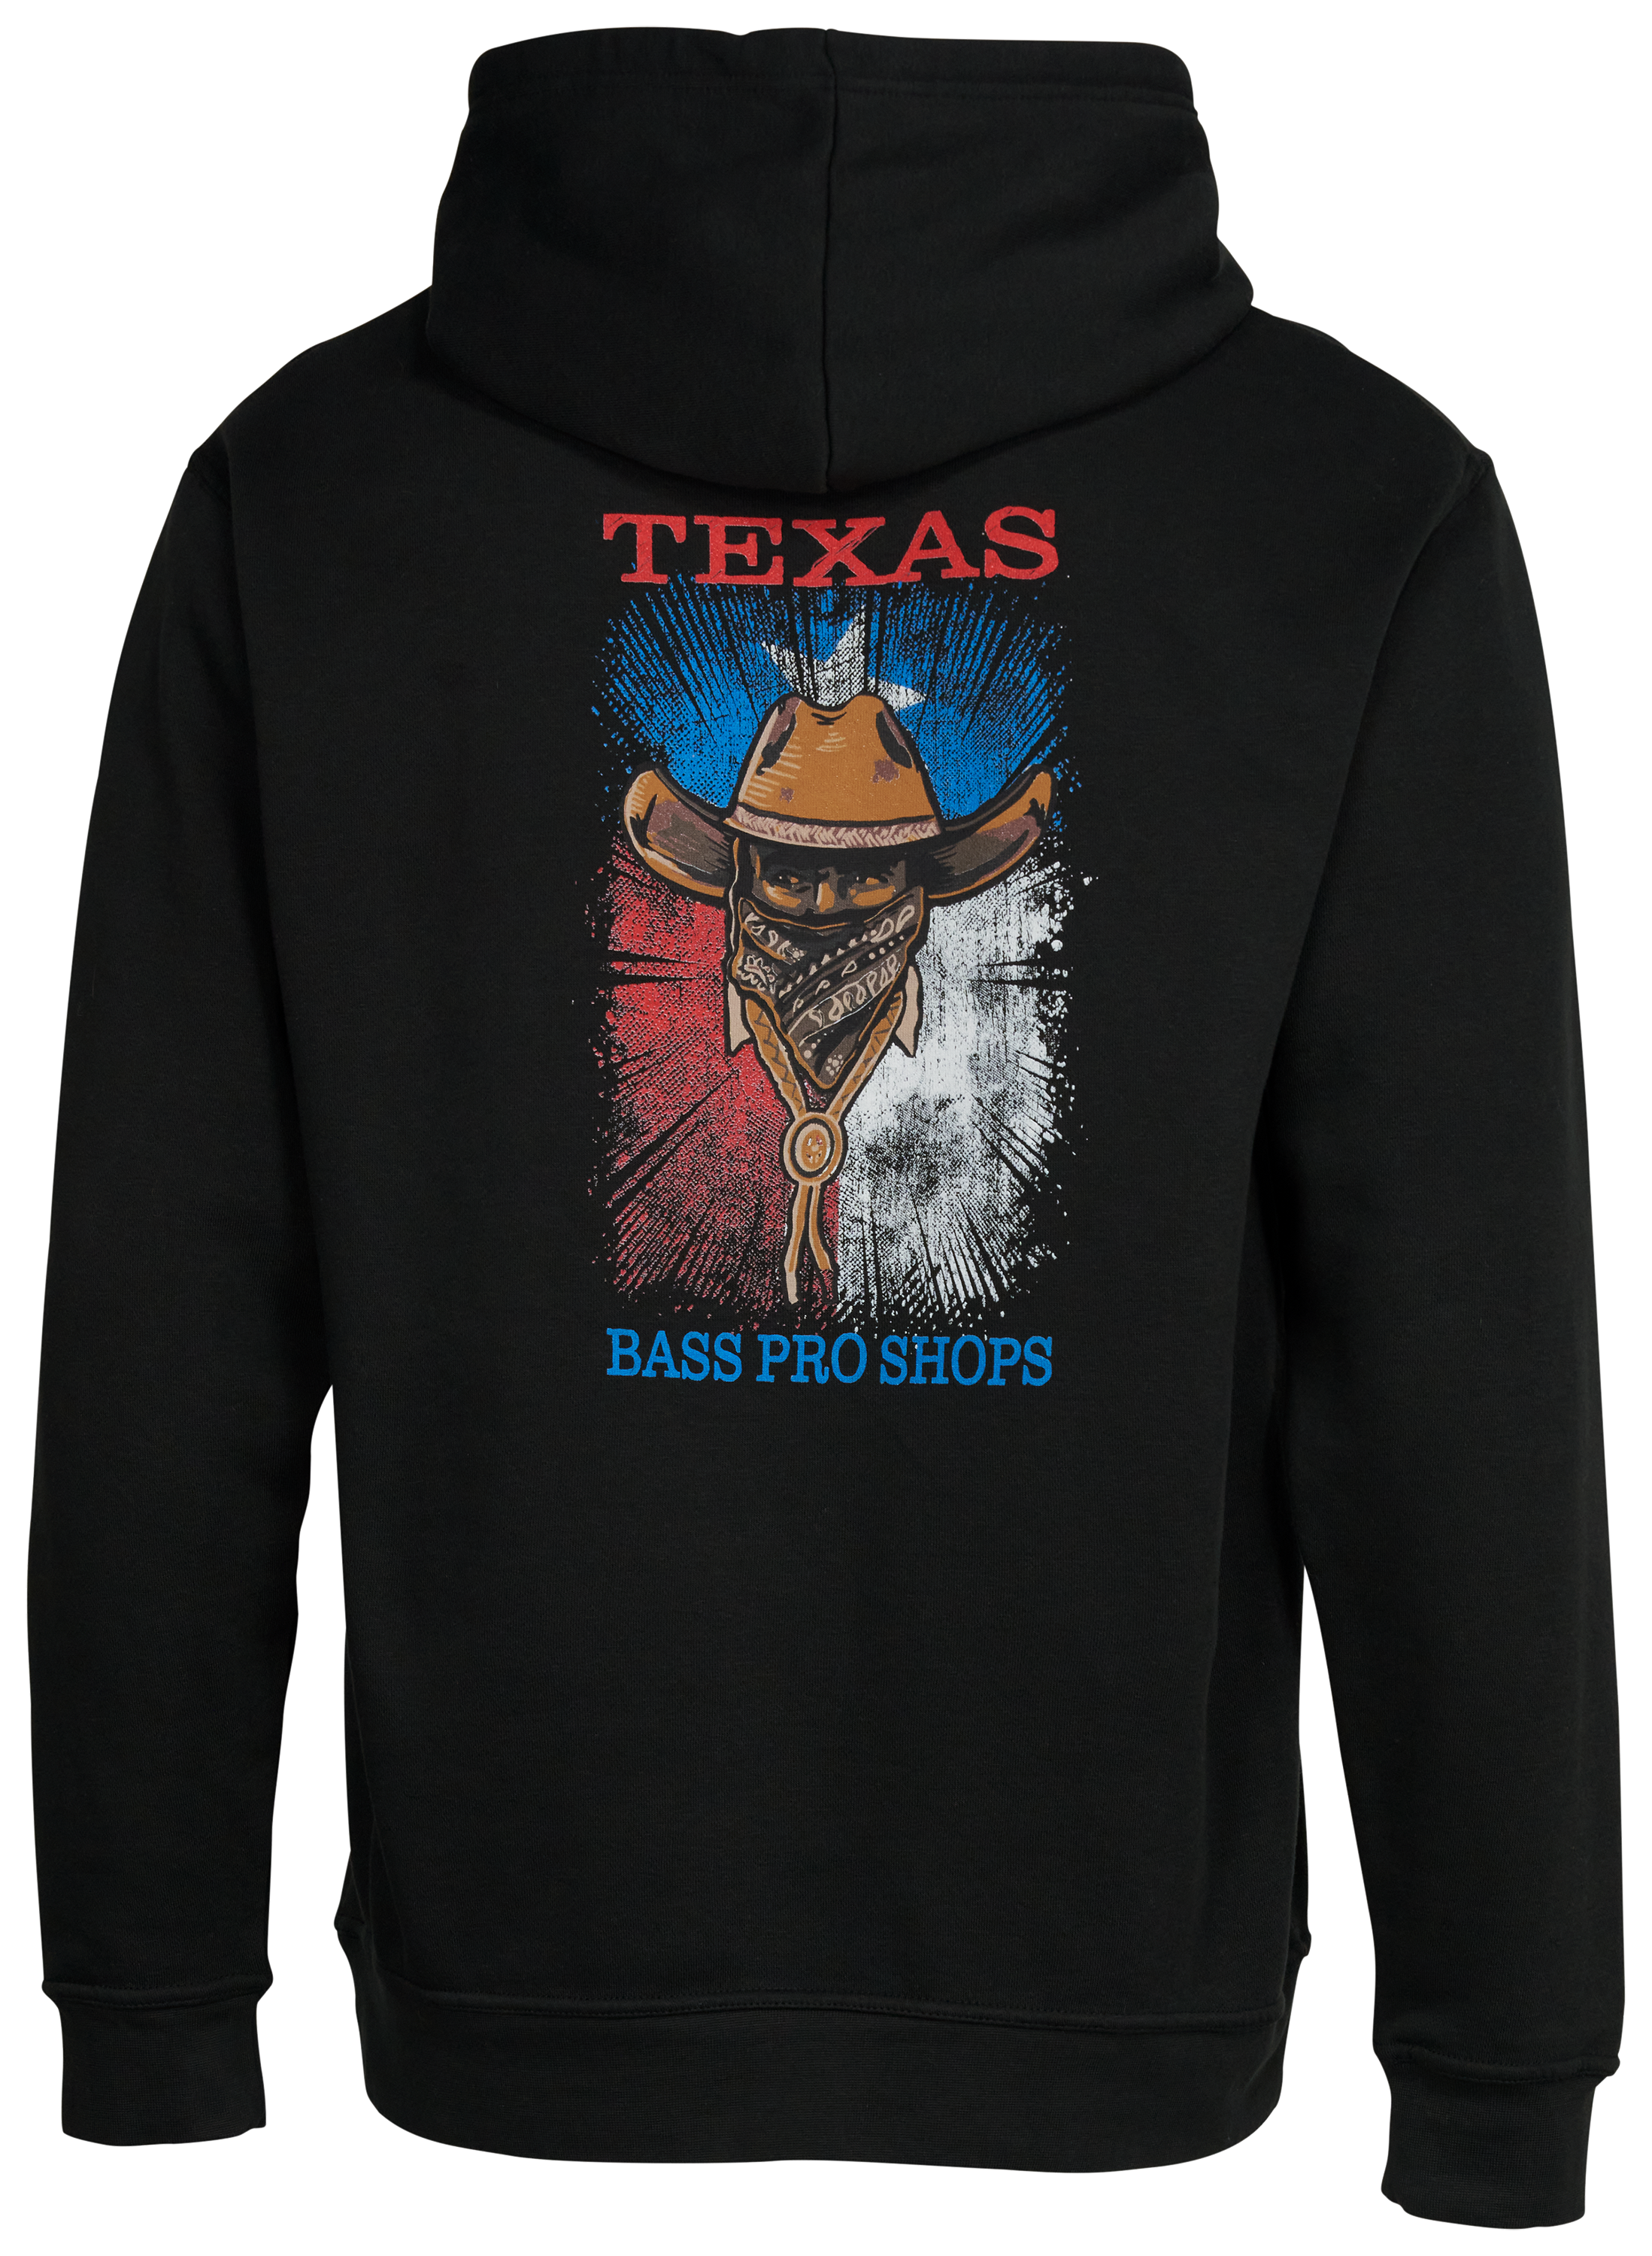 Bass Pro Shops Texas Cowboy Hoodie for Men - Black - 2XL